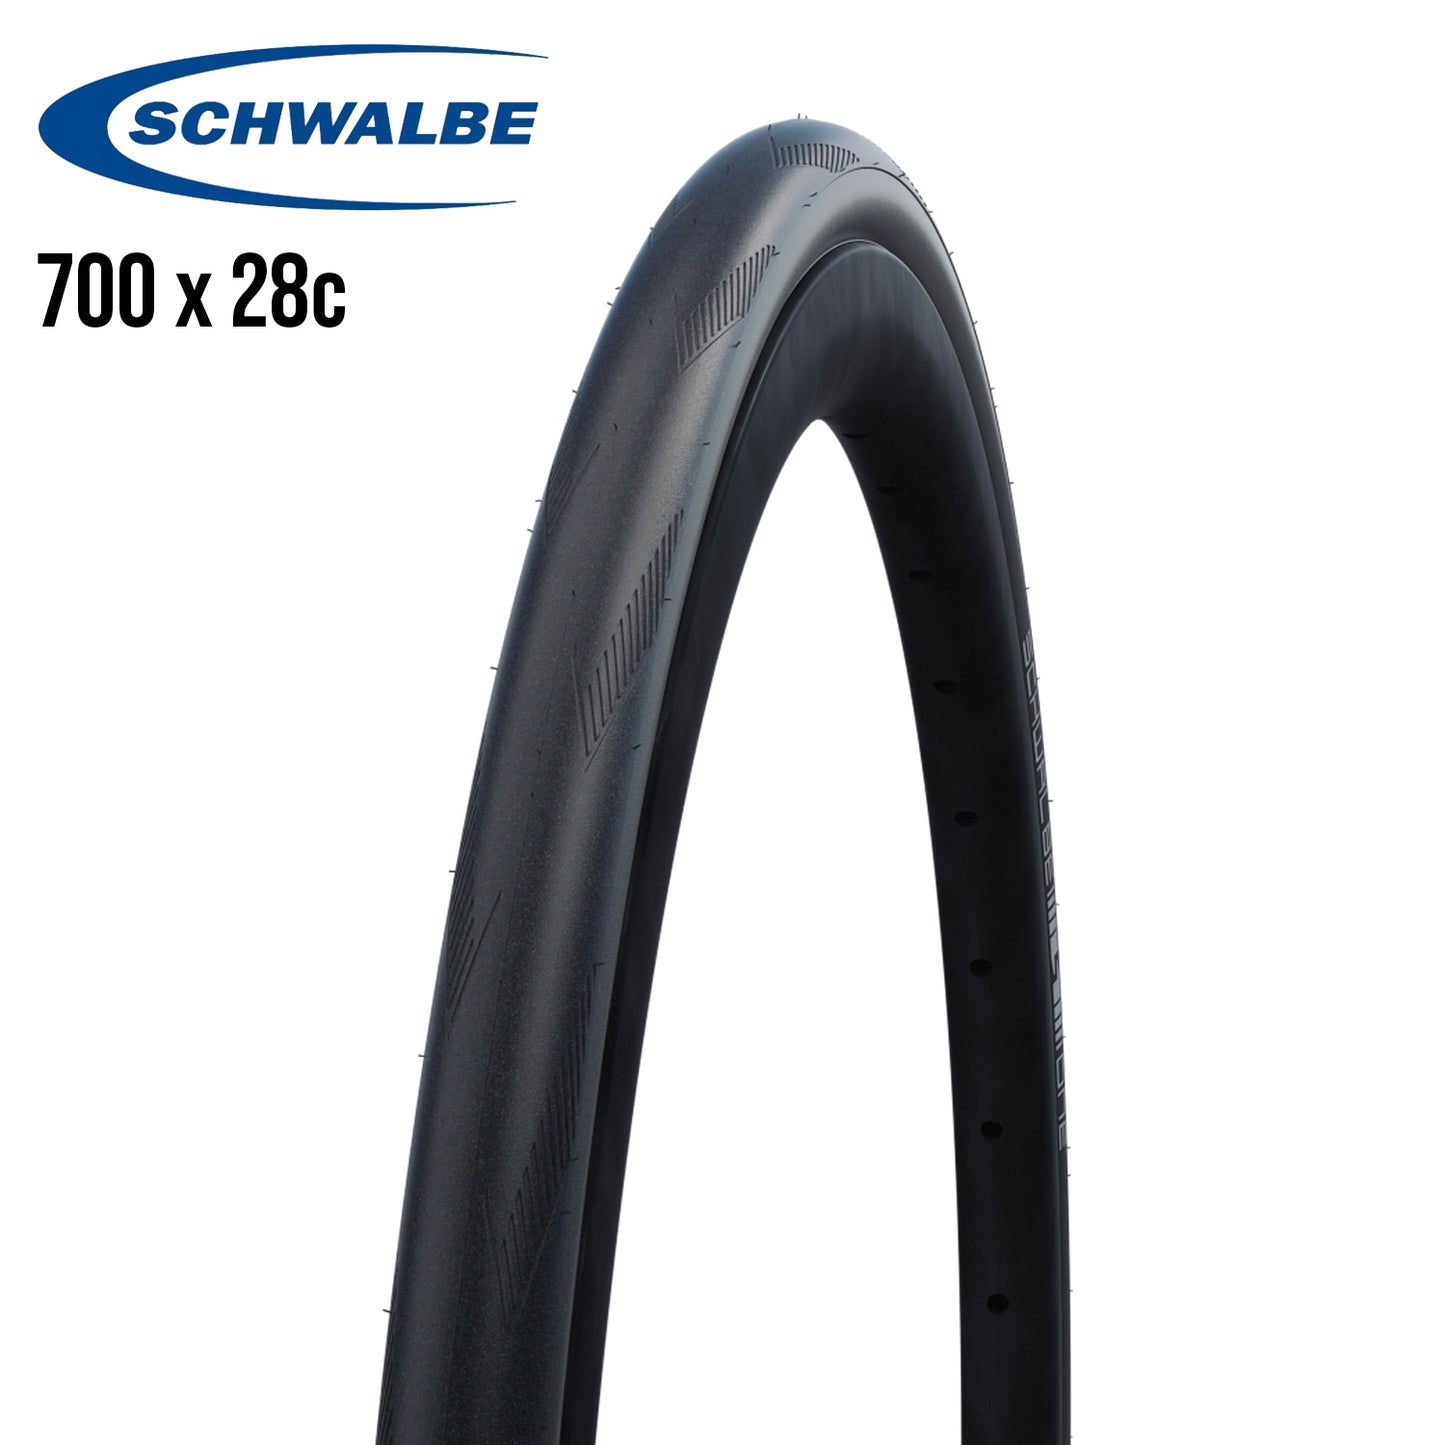 Schwalbe One All-Round Road Bike Tire - Black